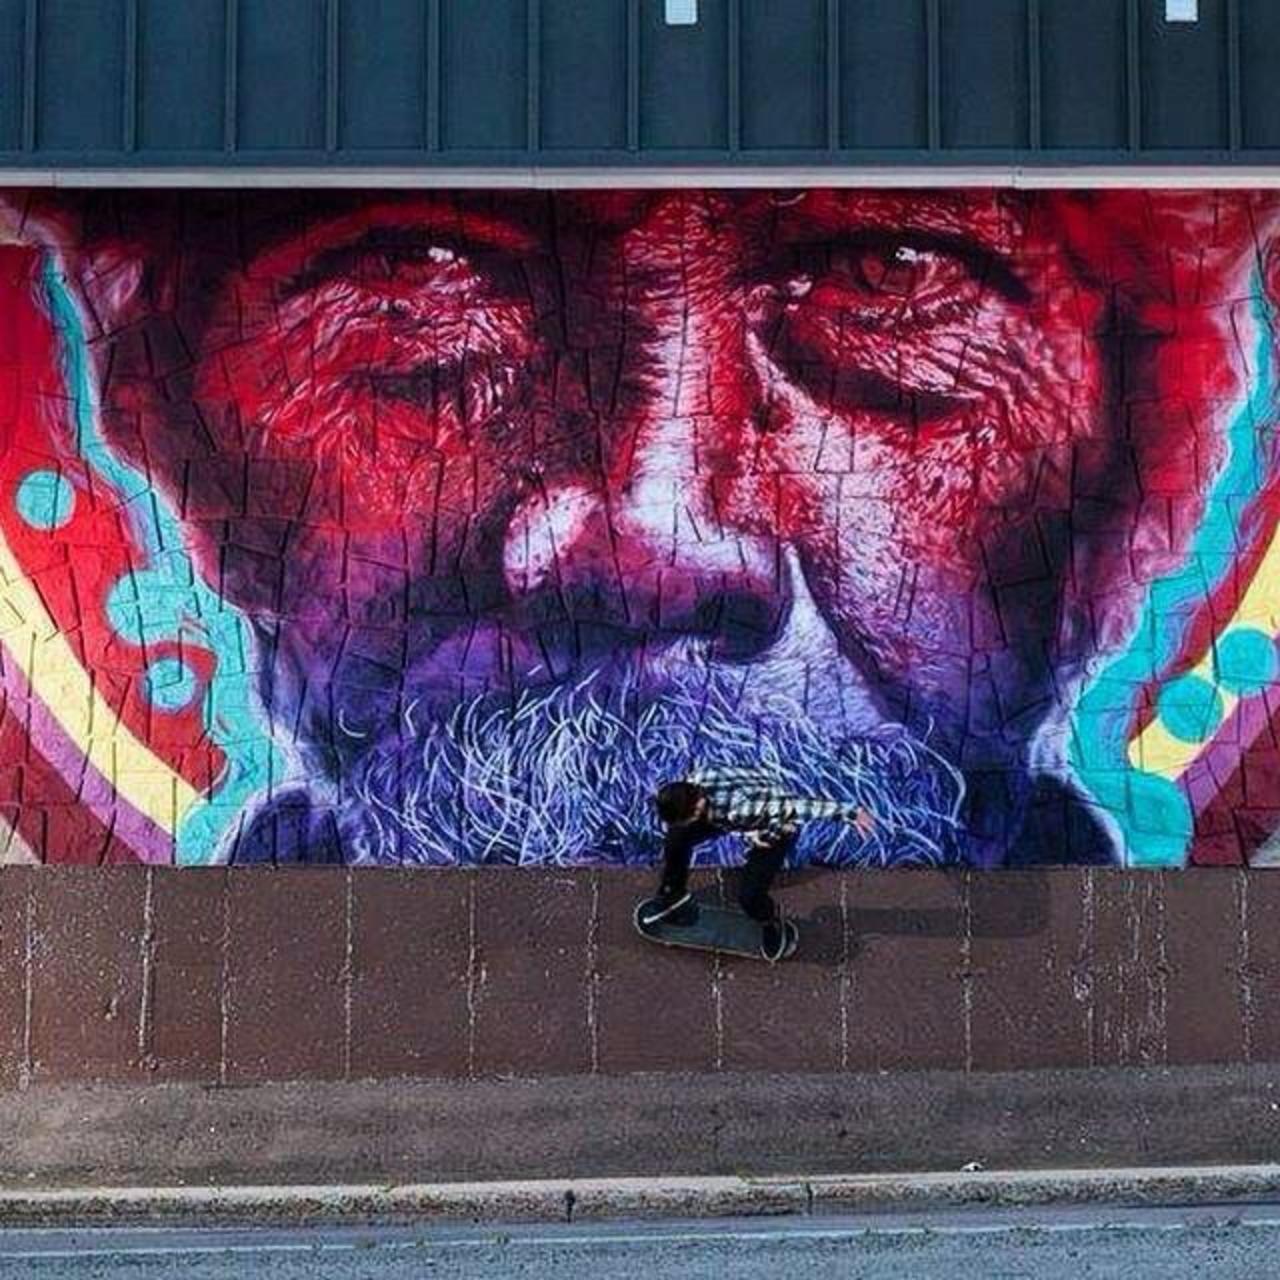 “@GoogleStreetArt: From Montcon, Canada, Kevin Ledo's class Street Art portrait 

#art #mural #graffiti #streetart http://t.co/PiVr6UMxVr”